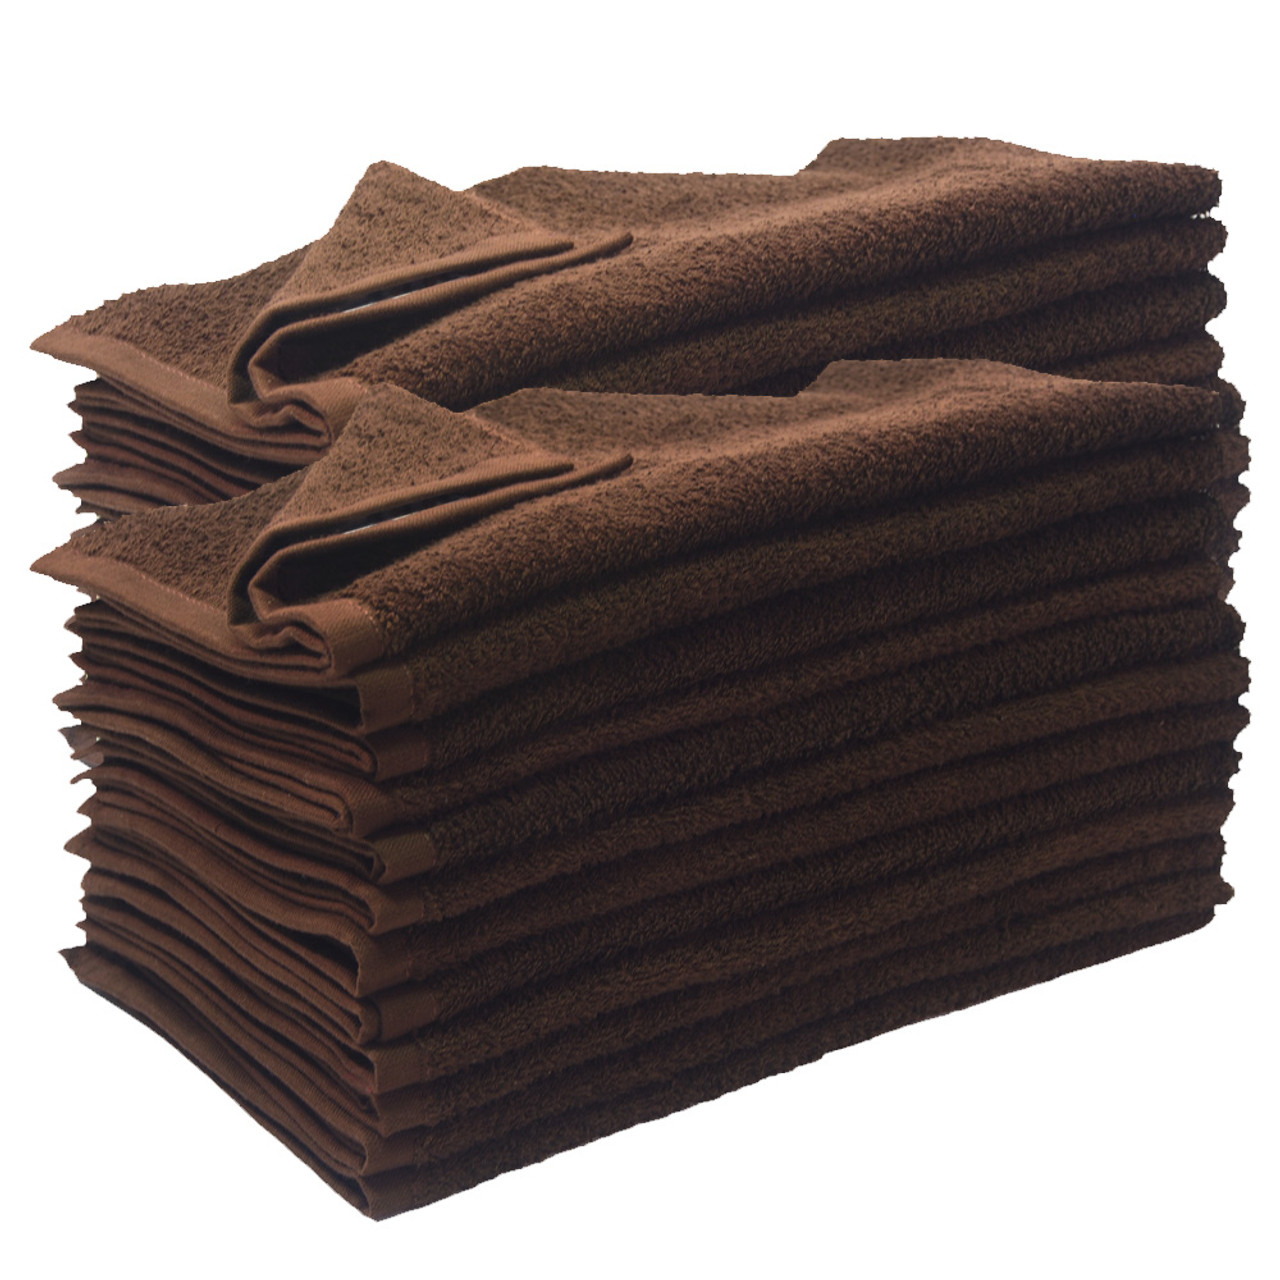 Salon Hand Towels 15x26 Economy